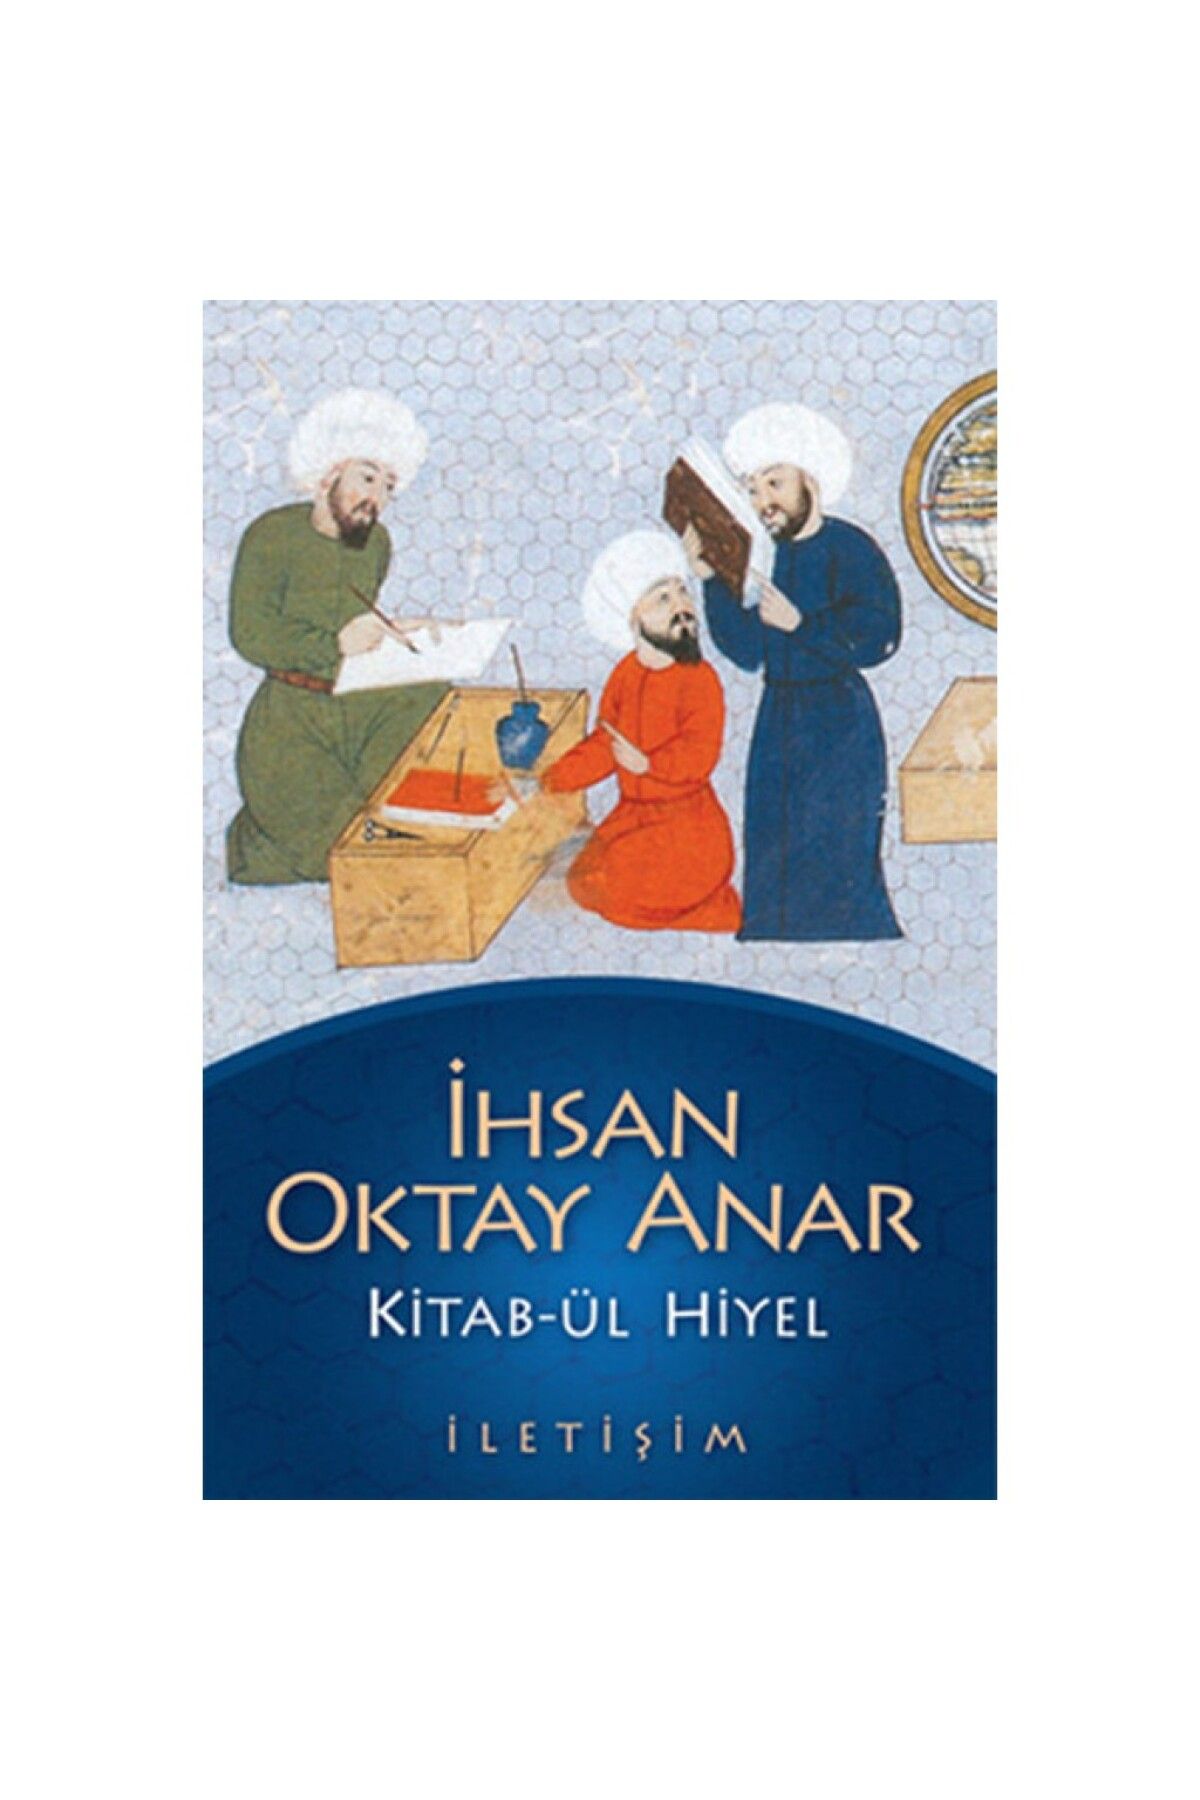 İletişim Yayınları Kitab-ül Hiyel / Ihsan Oktay Anar /